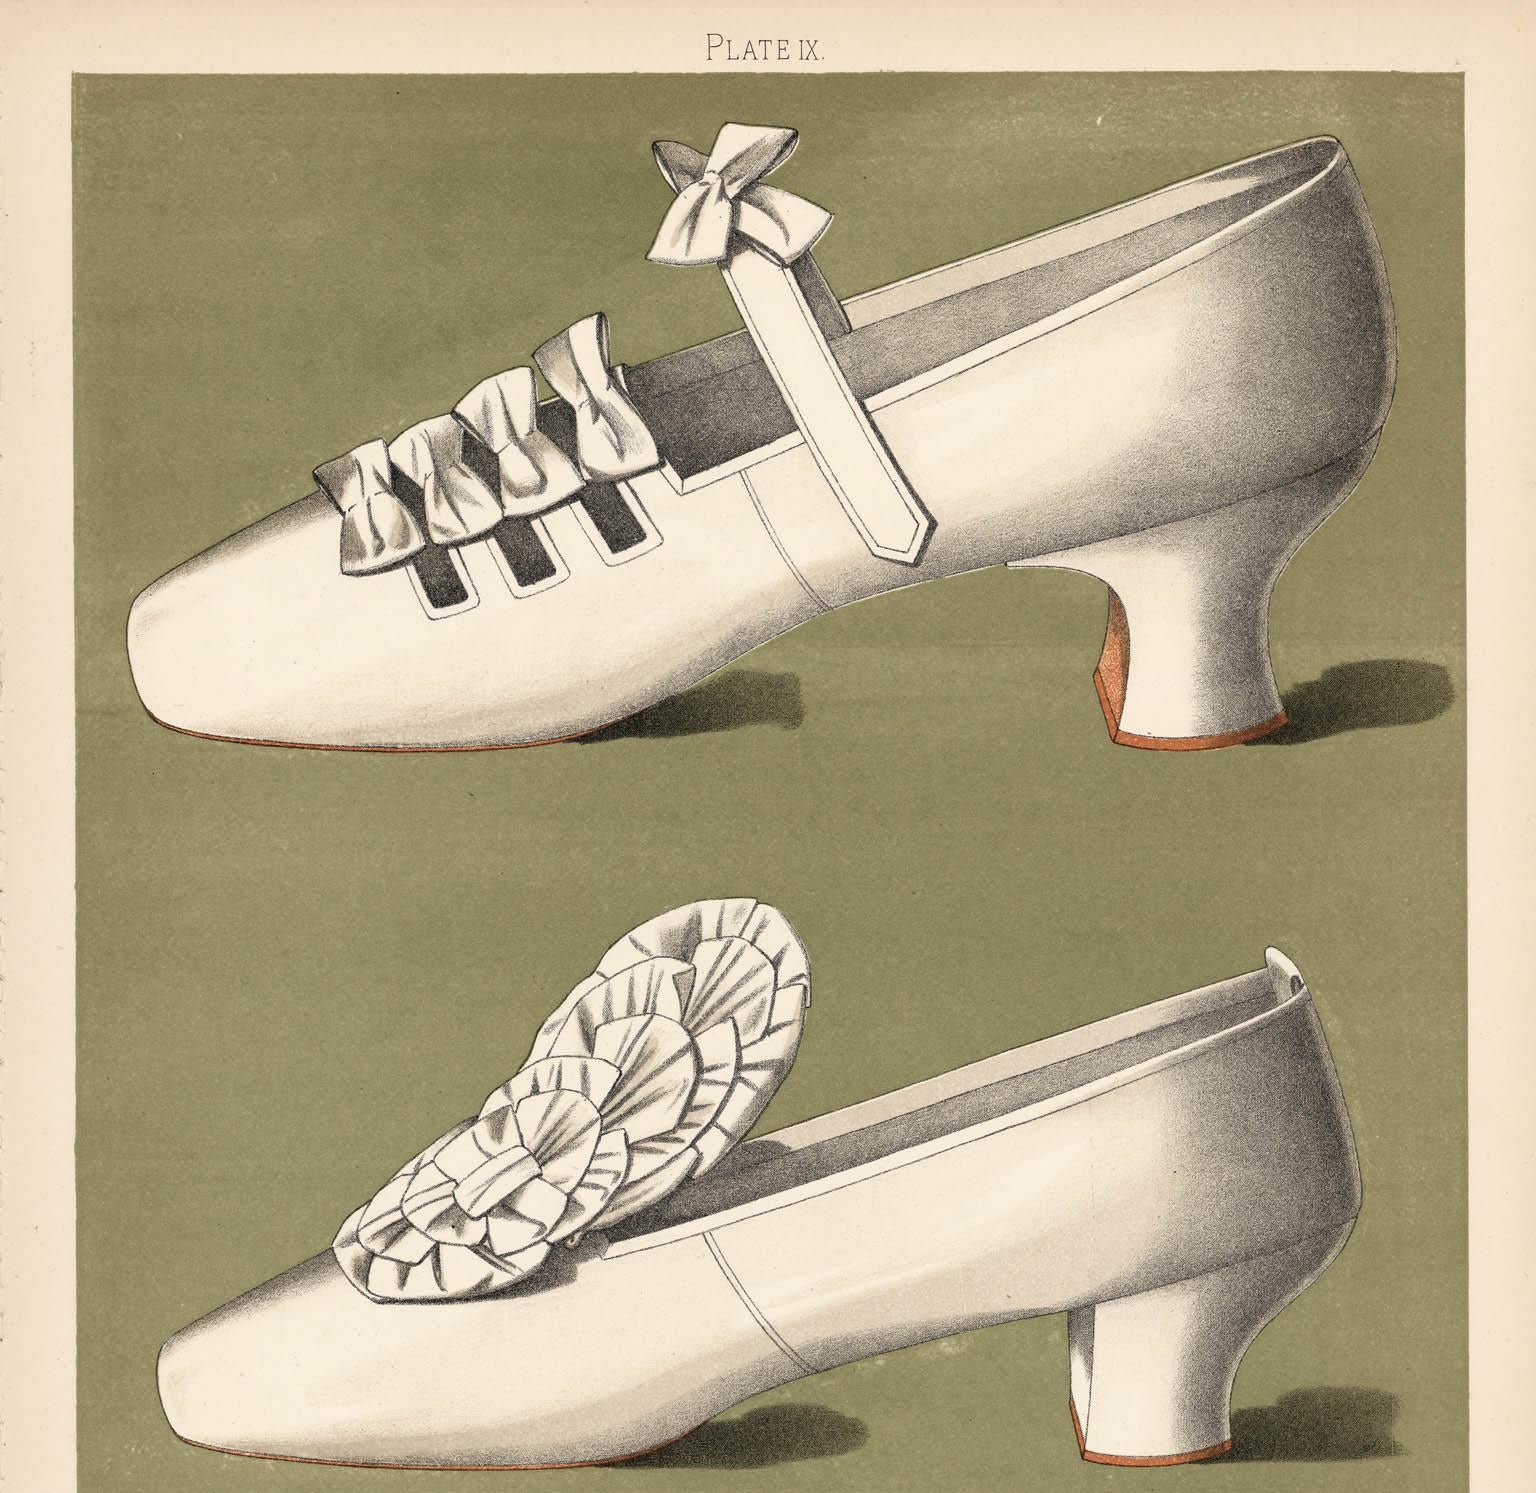 Ladies Dress Shoes.  Plate IX. - Print by T. Watson Greig